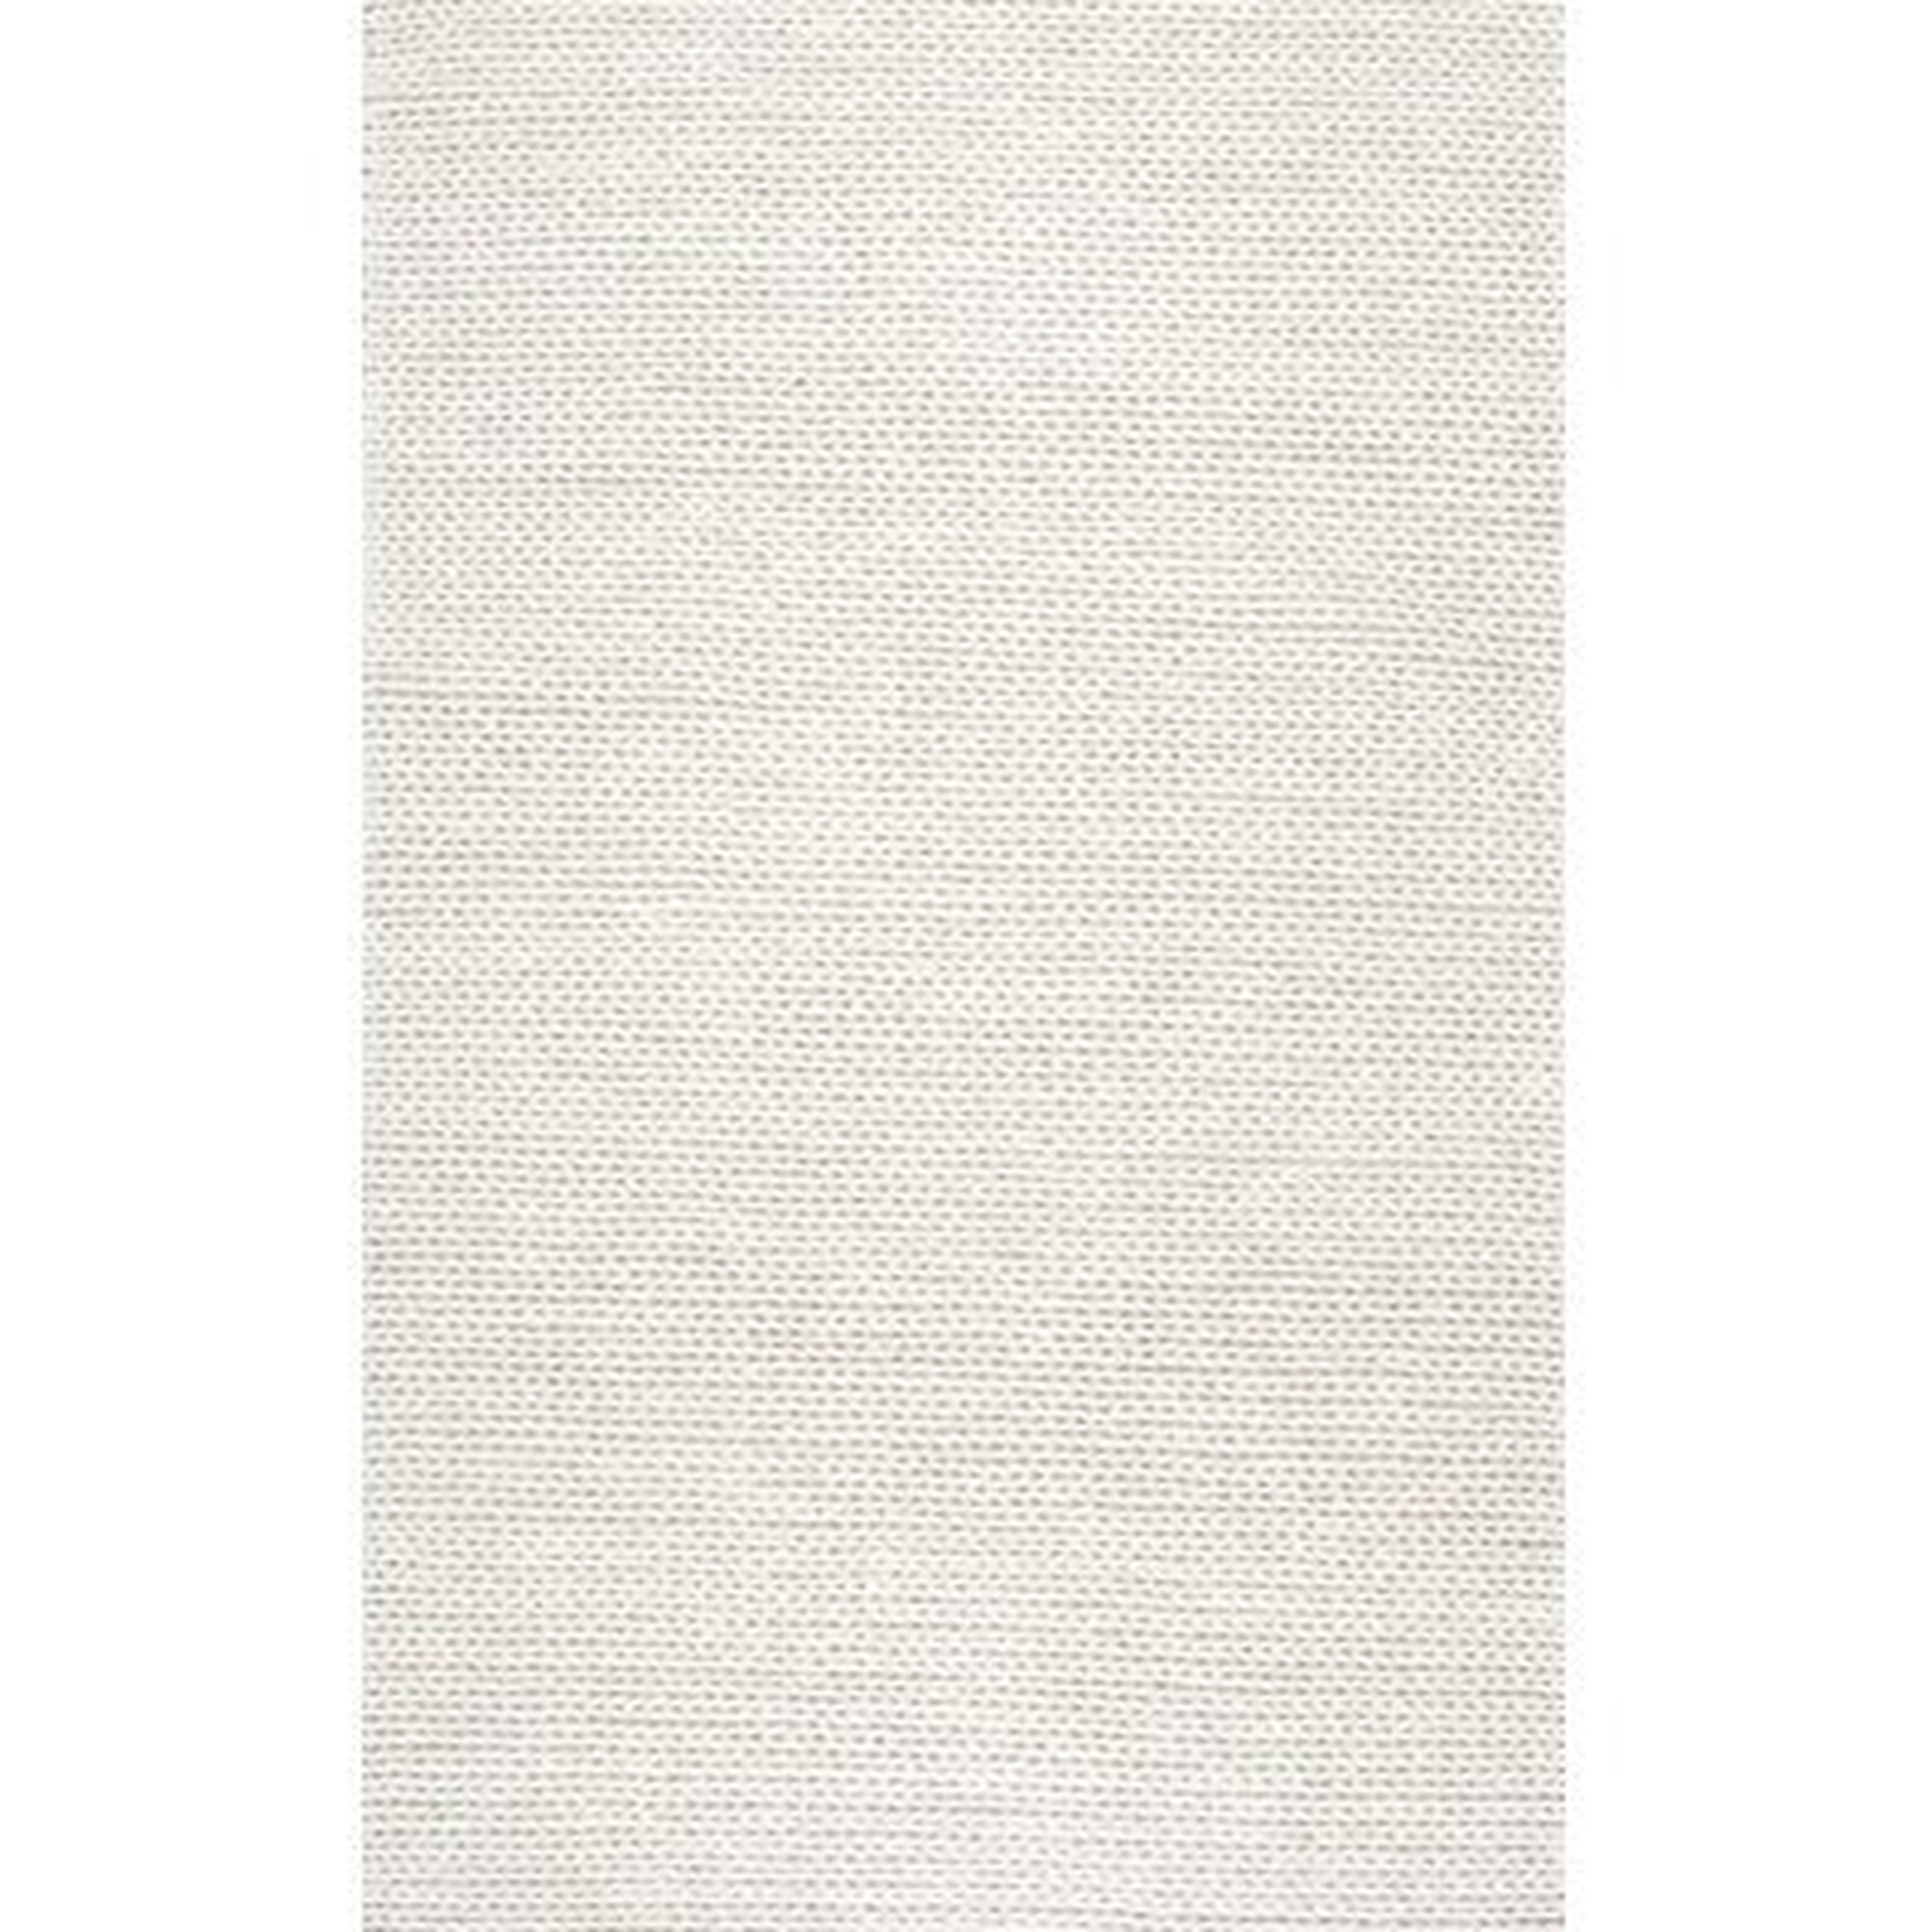 Arviso Hand-Woven Wool White Area Rug, 10' x 14' - Wayfair